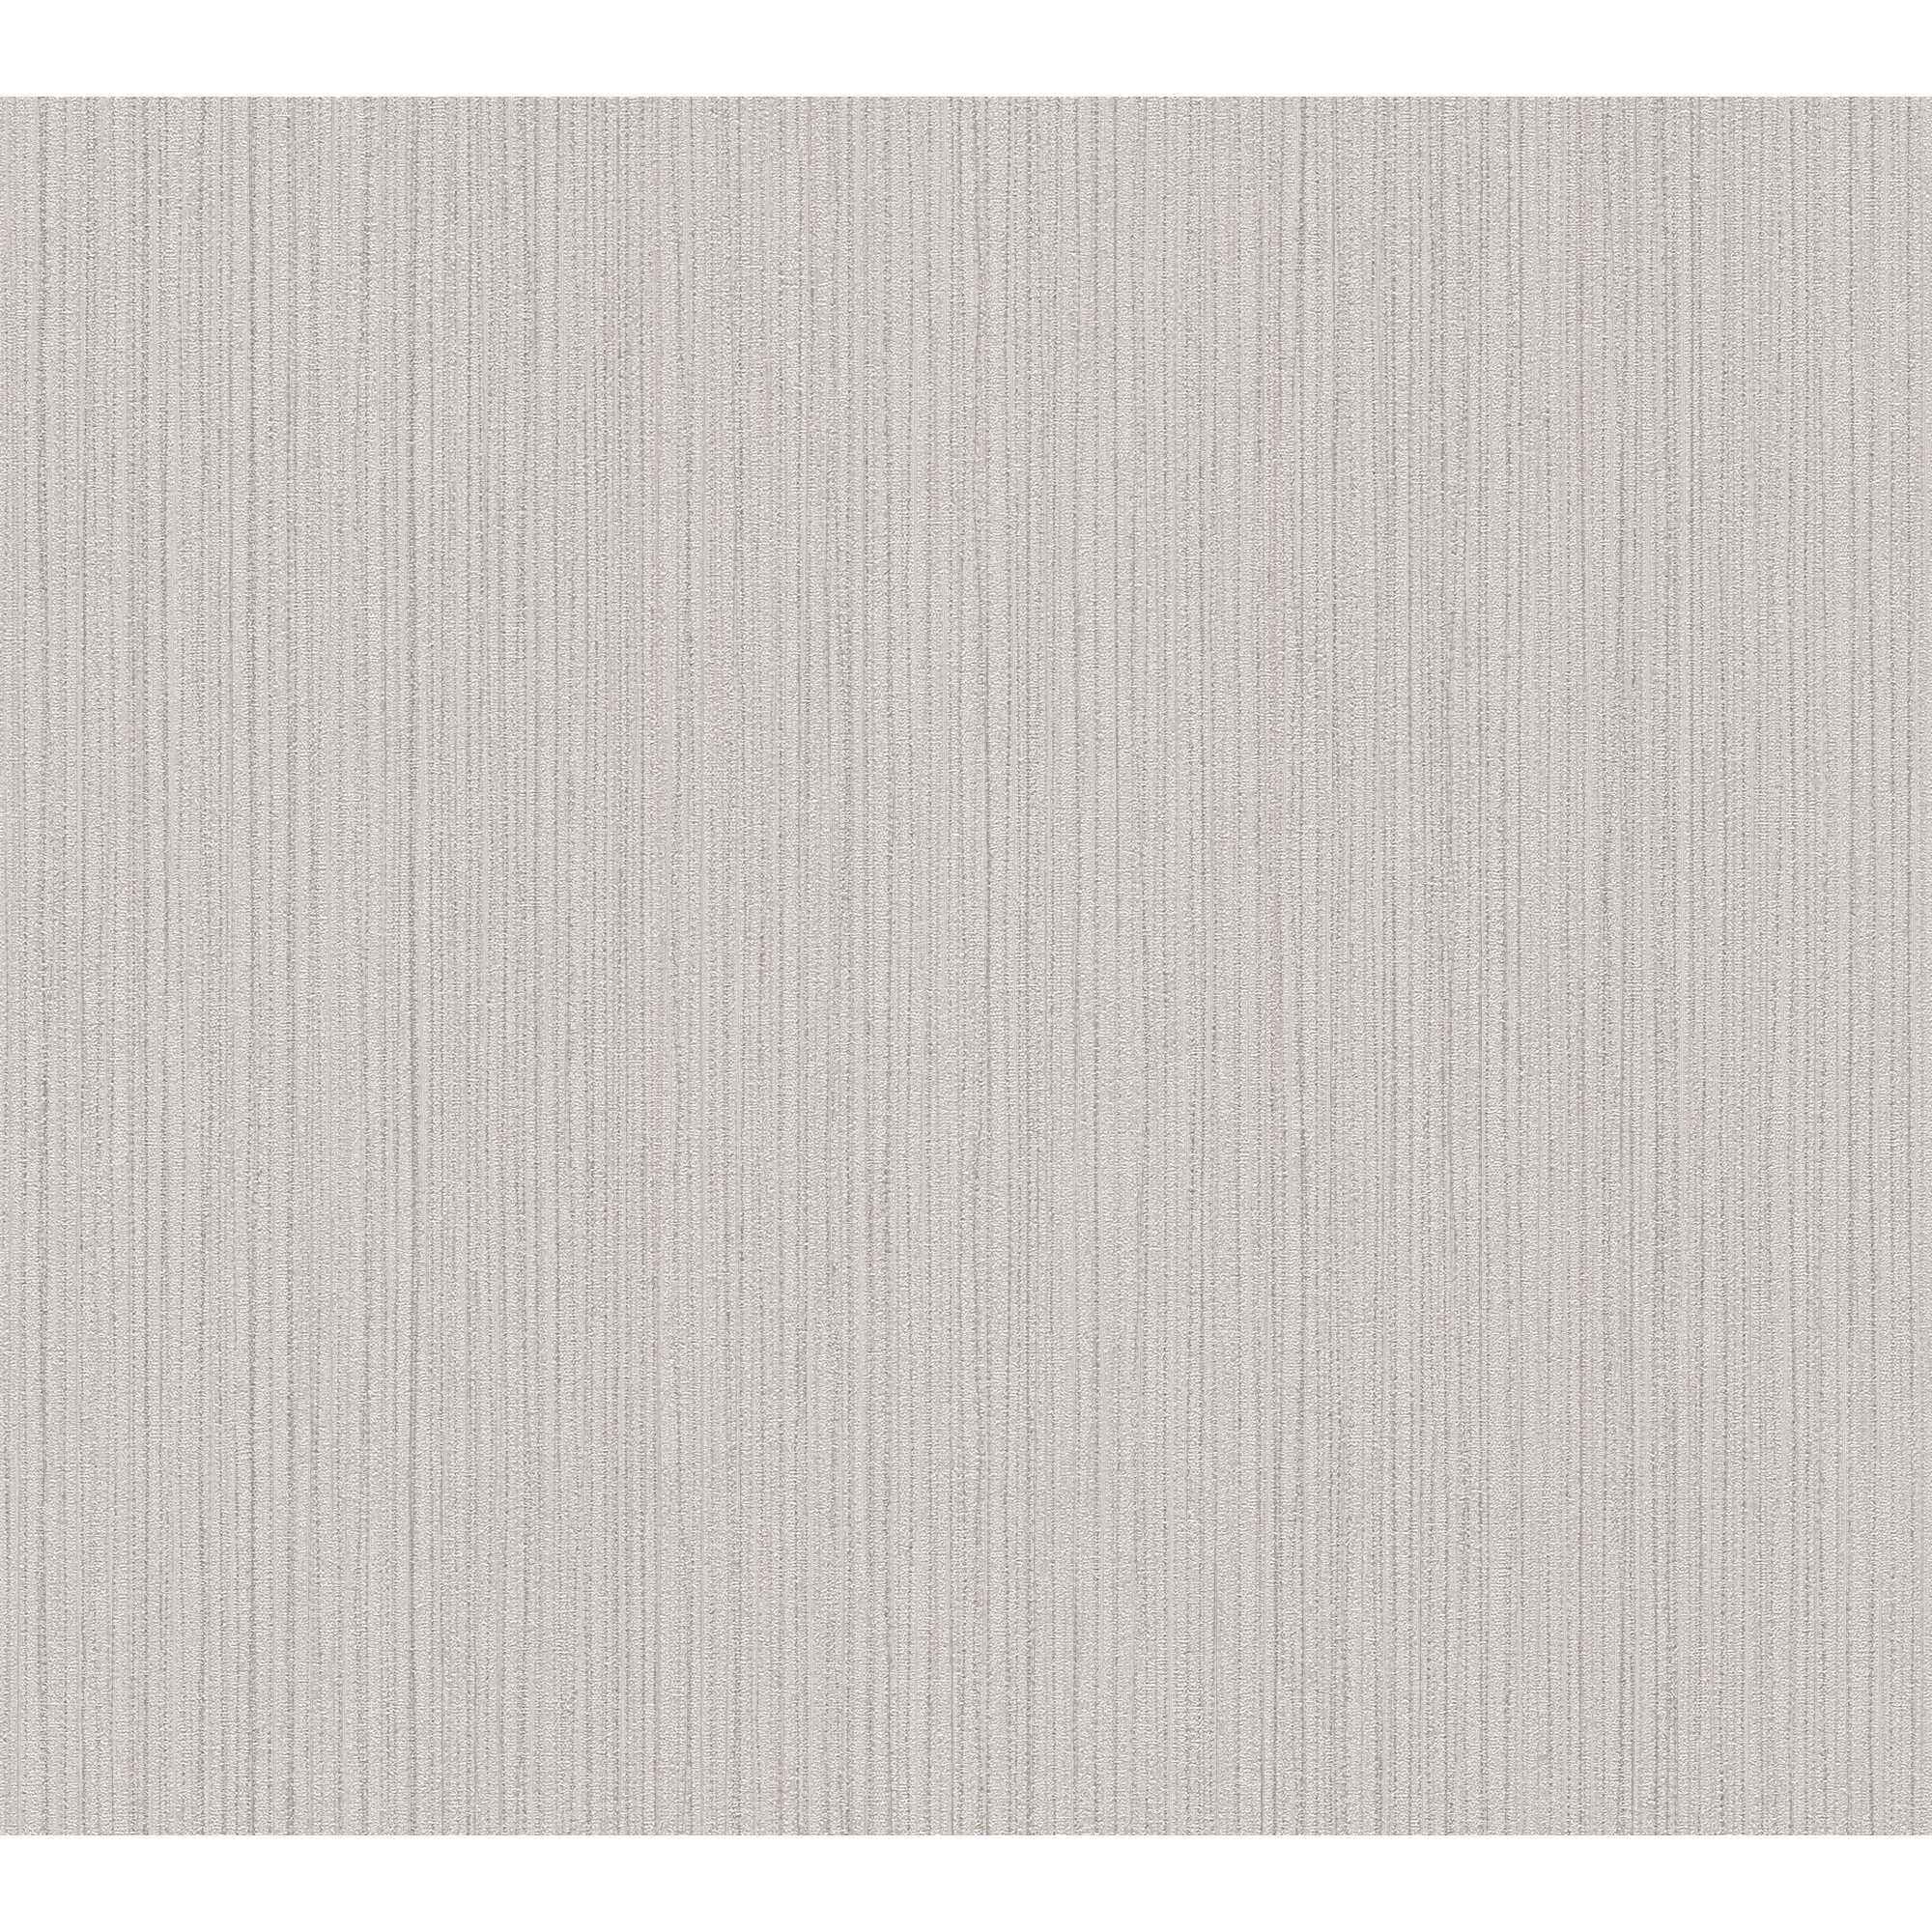 Vliestapete 'The BoS' Streifen grau/silber 10,05 x 0,53 m + product picture